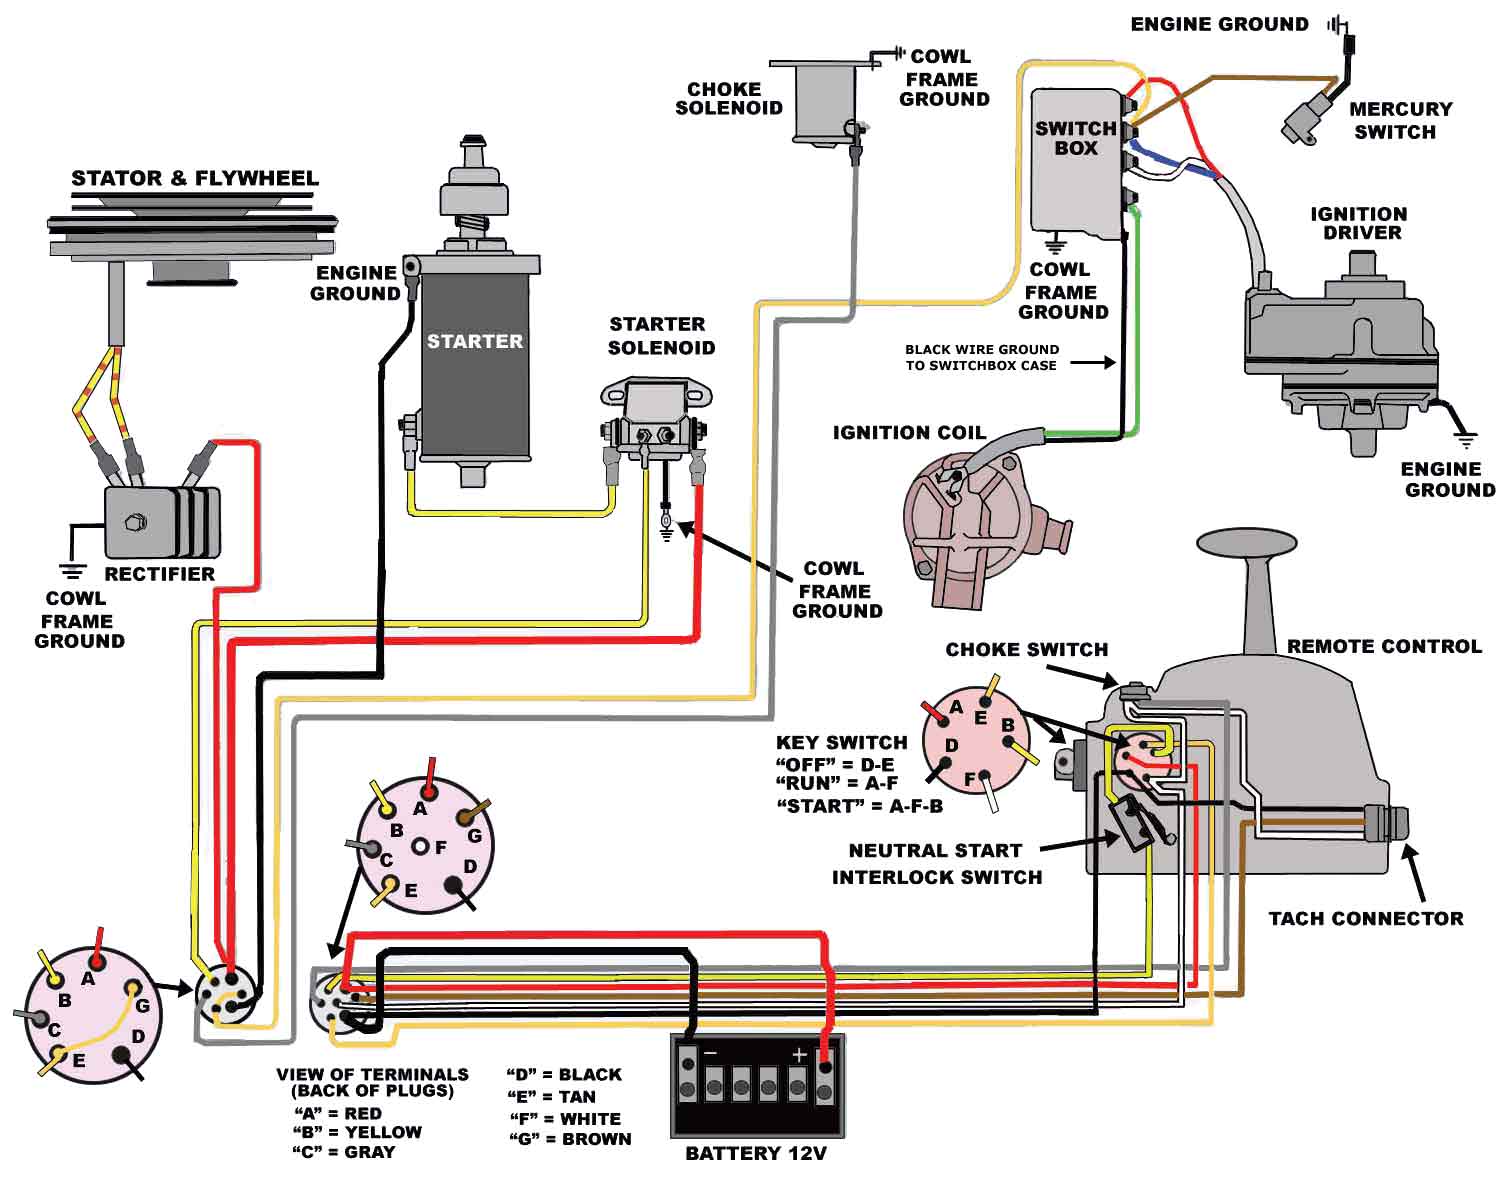 Diagram Chevrolet Ignition Wiring Diagram 1974 Full Version Hd Quality Diagram 1974 Eardiagram Eracleaturismo It